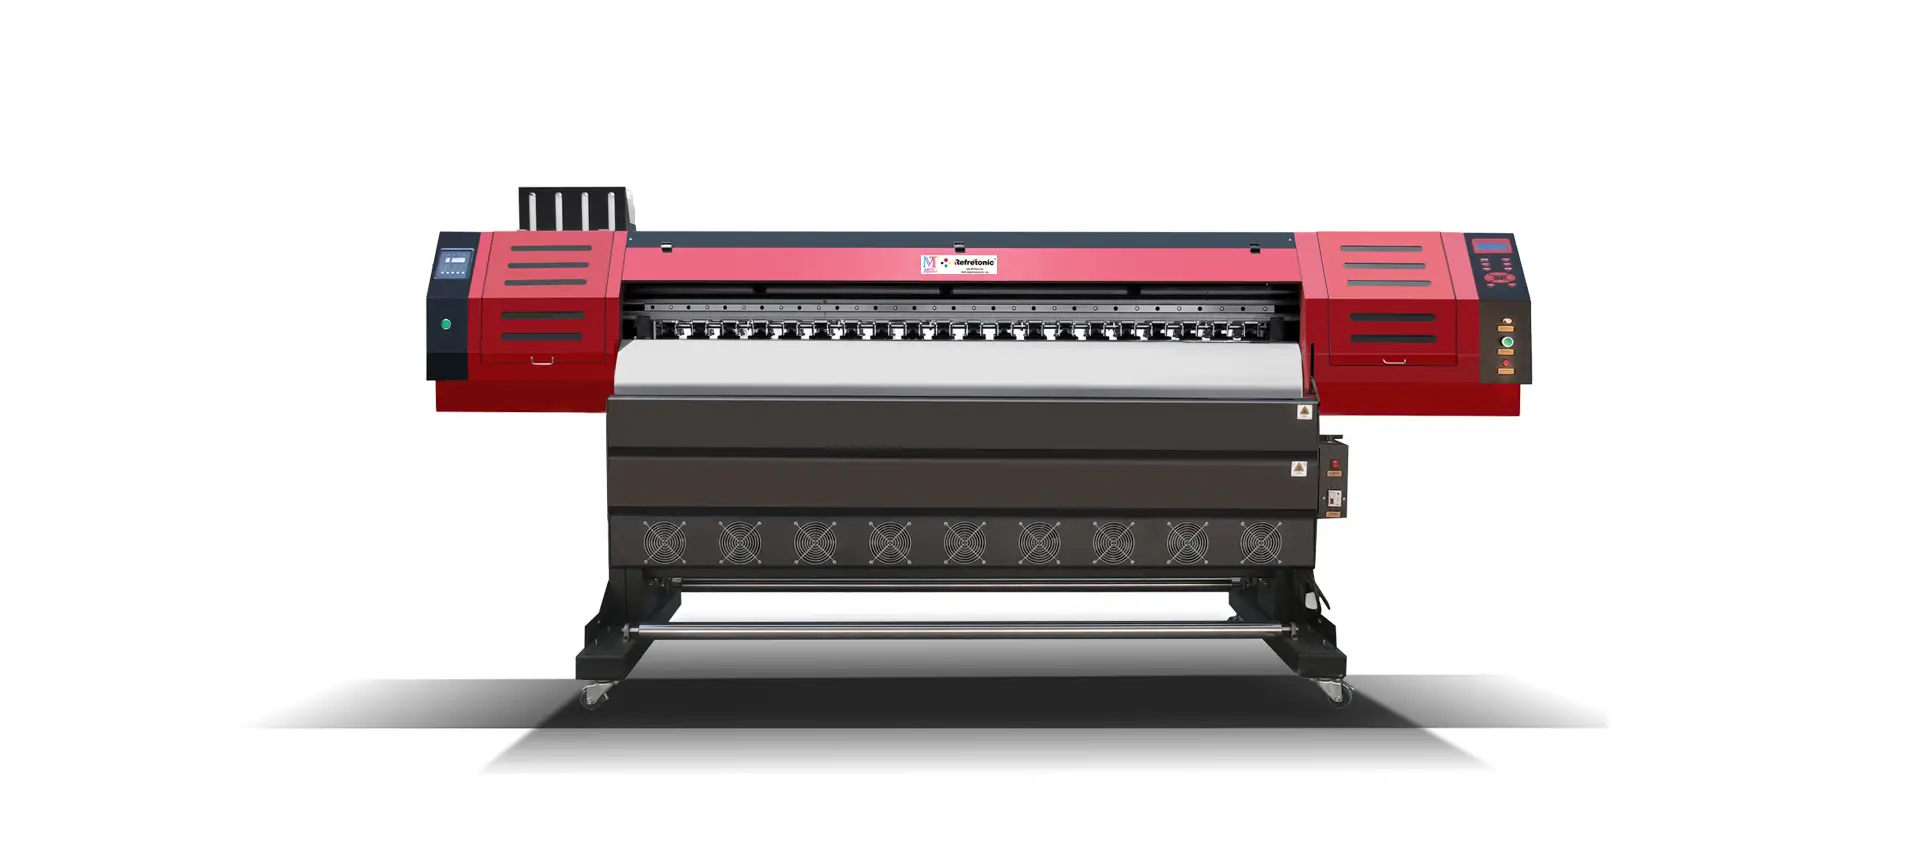 sublimation printer – Sublimation Printing